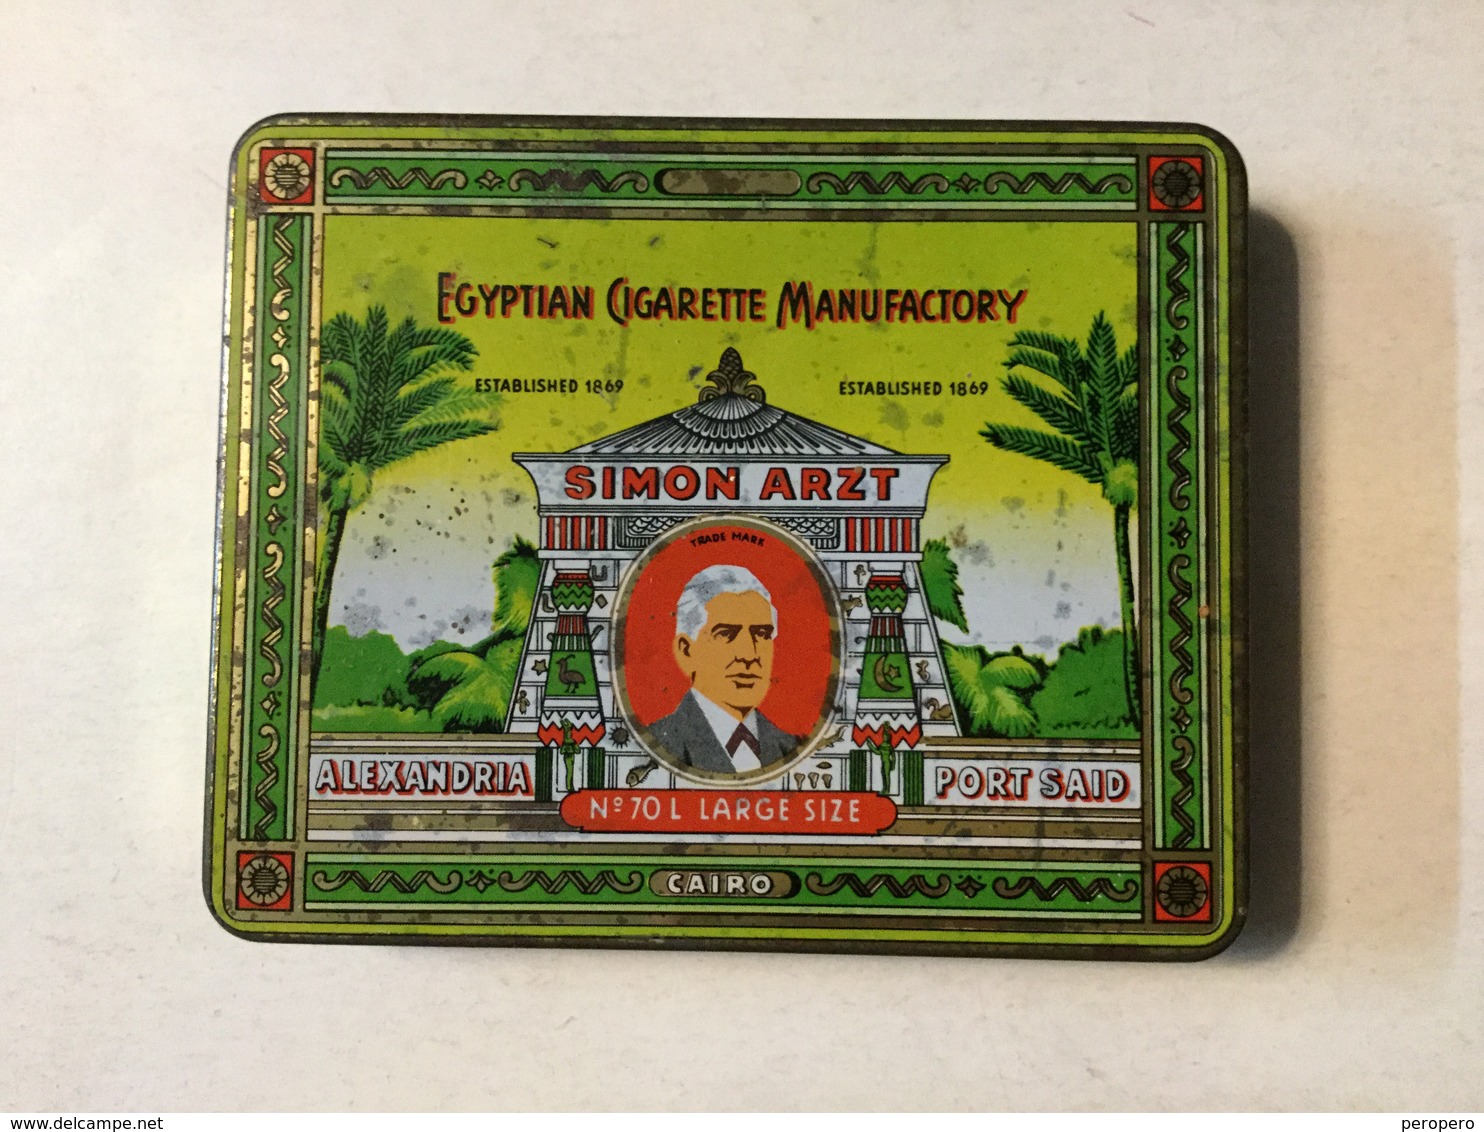 TOBACCO  TIN  BOX  EGYPTIAN CIGARETTE MANUFACTORY  SIMON ARZT - Boites à Tabac Vides